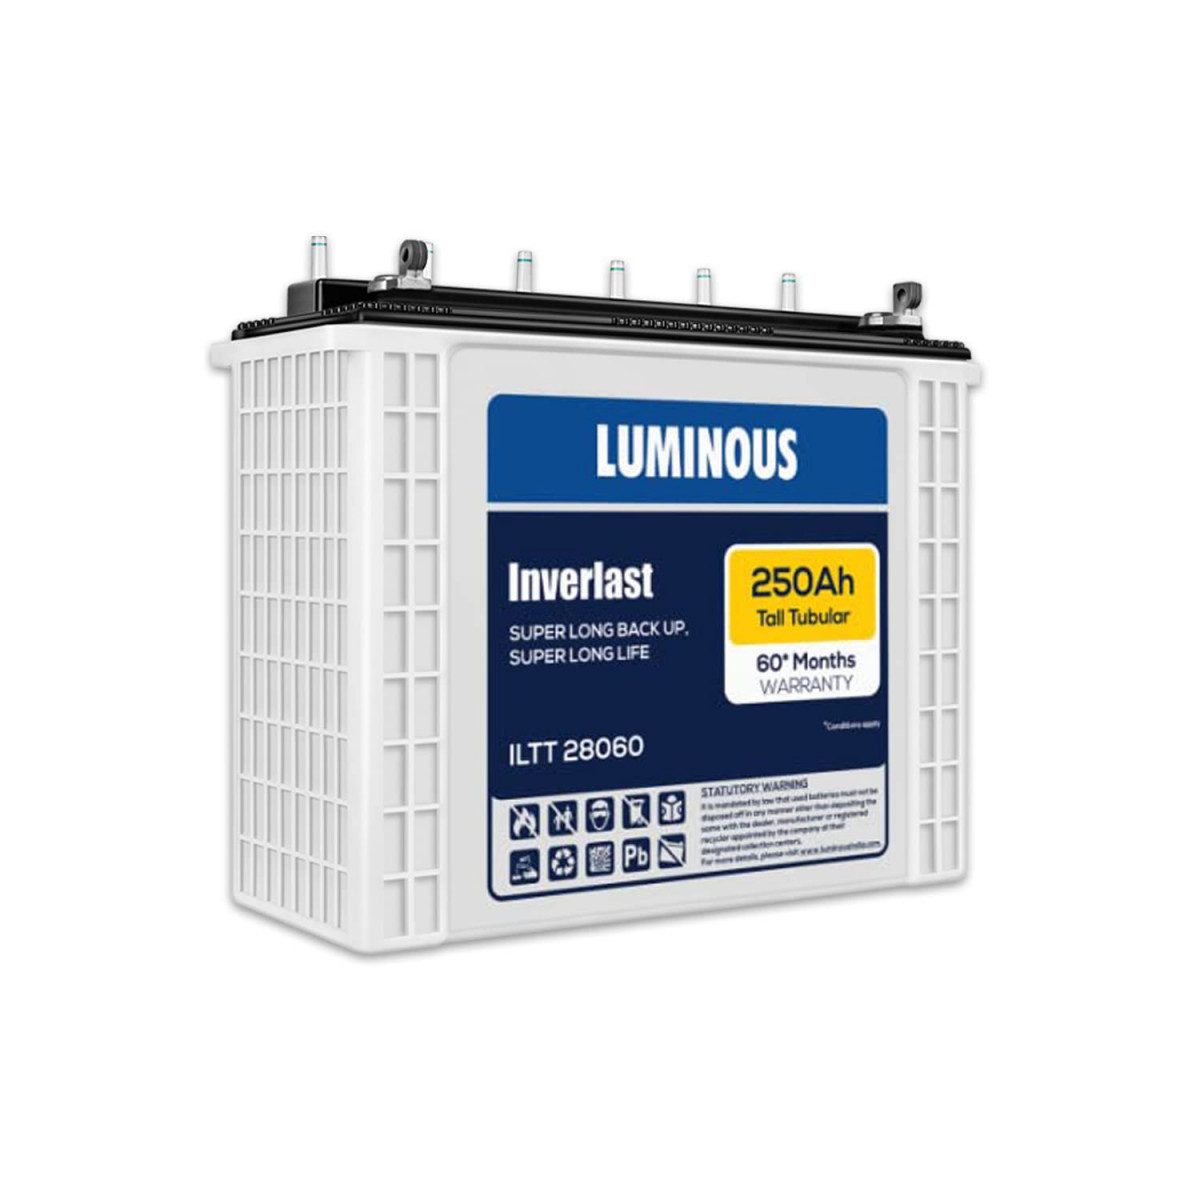 Luminous Inverlast ILTT28060 250 Ah Tall Tubular Inverter Battery with 60 months warranty for Home Office  Shops